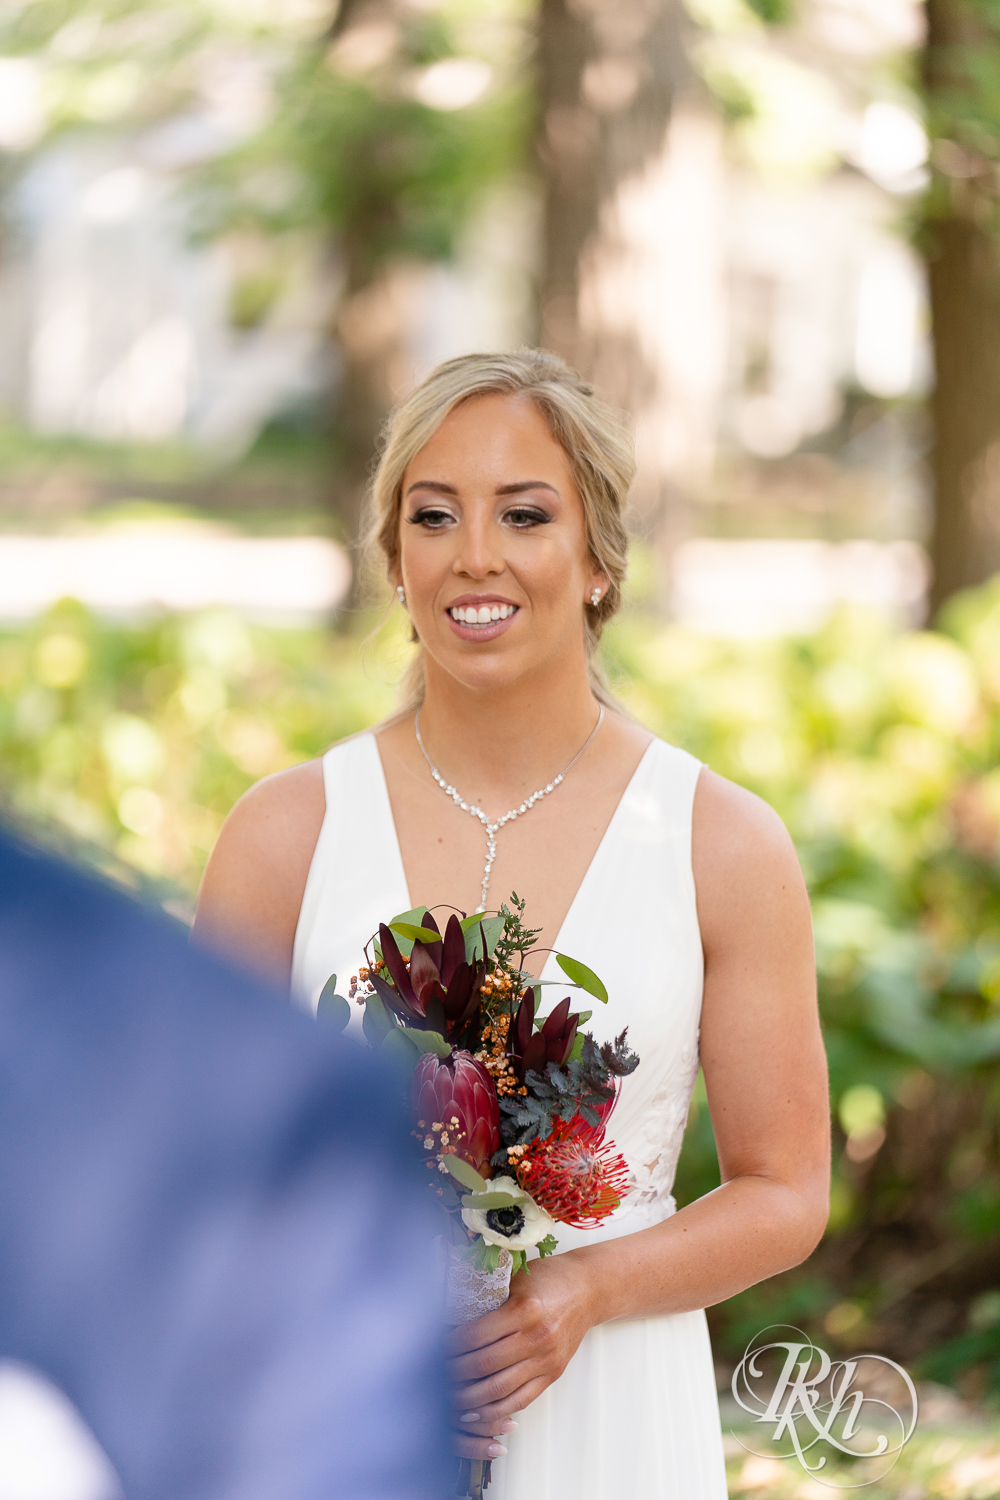 First look between bride and groom at Irvine Park in Saint Paul, Minnesota.